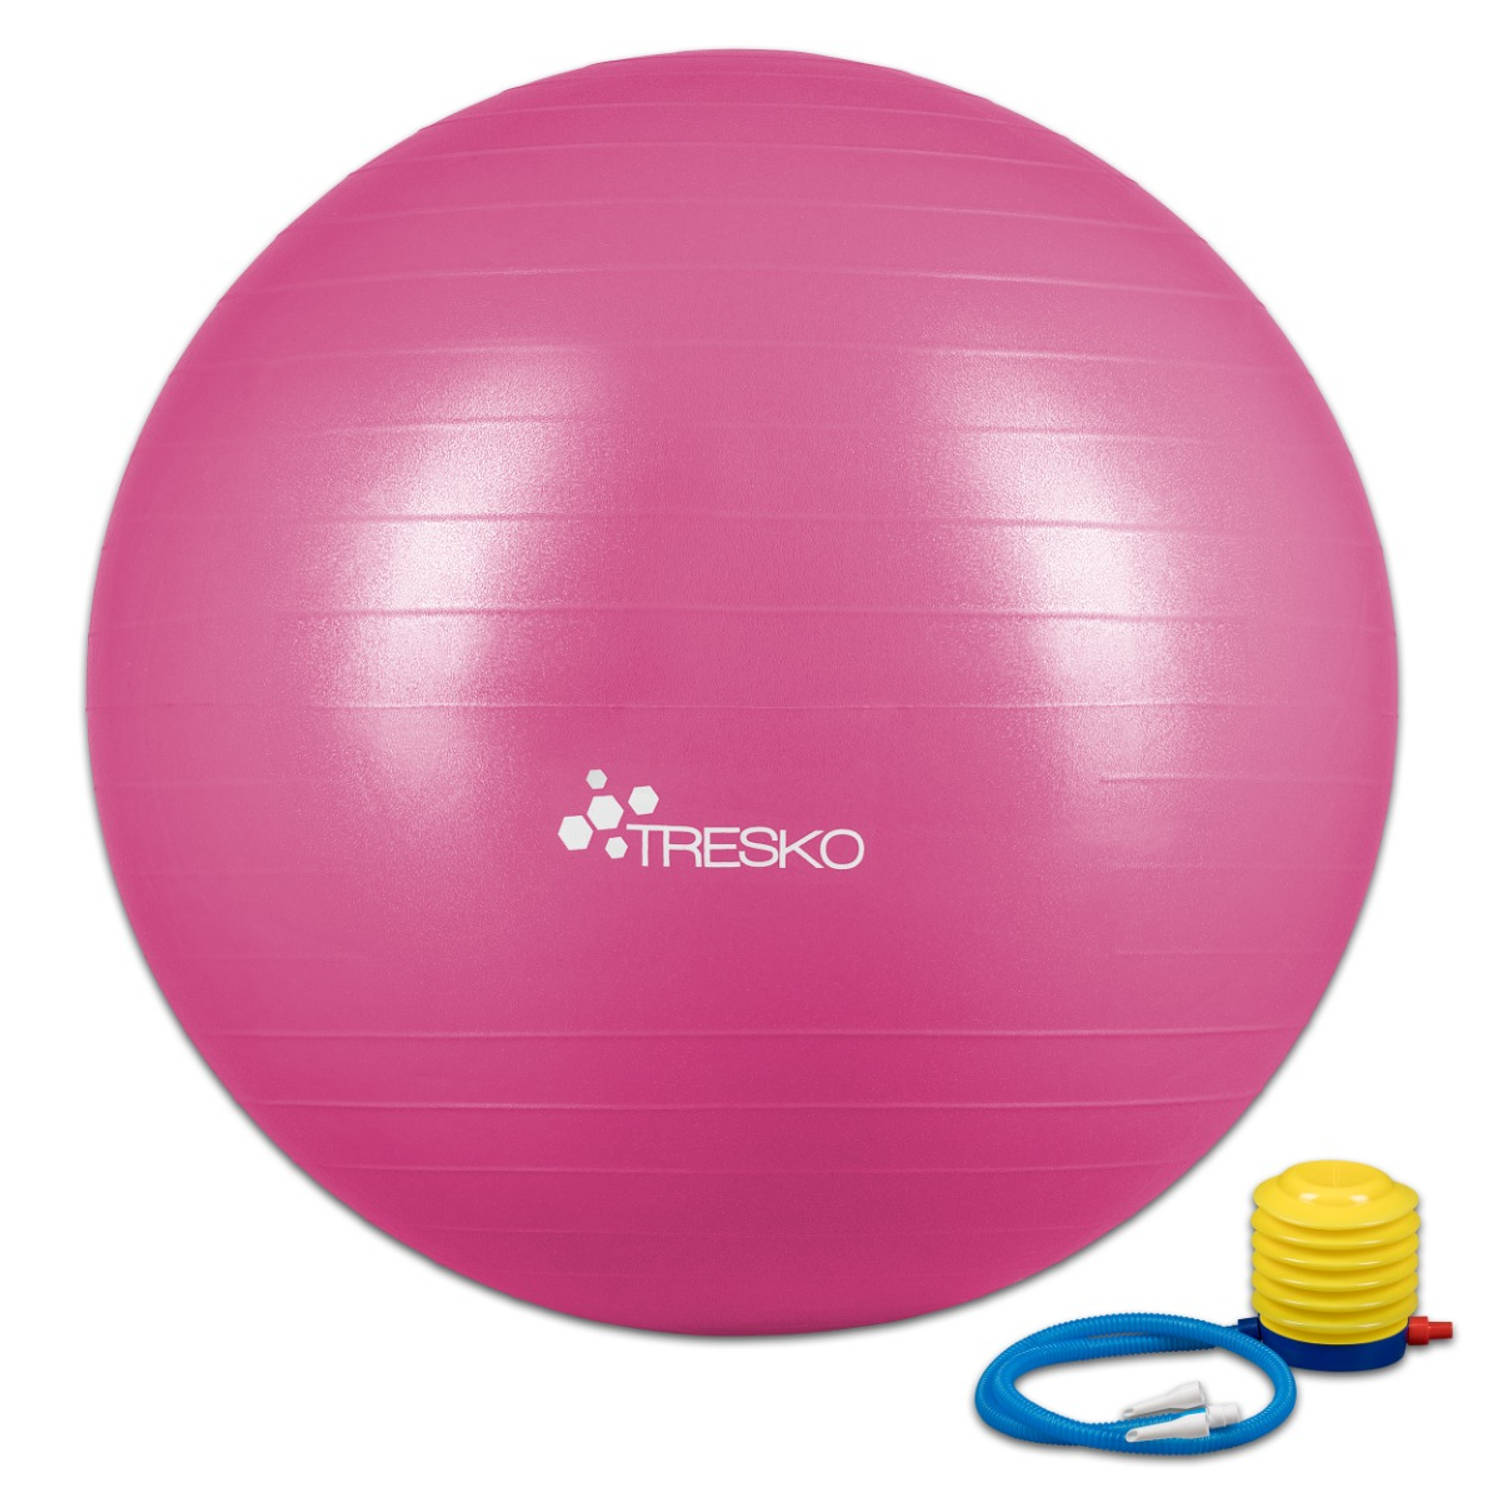 gek geworden comfortabel Vervorming Tresko - Fitnessbal - Yogabal met pomp - trainingsbal - pilates - gymbal -  diameter 85 cm - Roze | Blokker